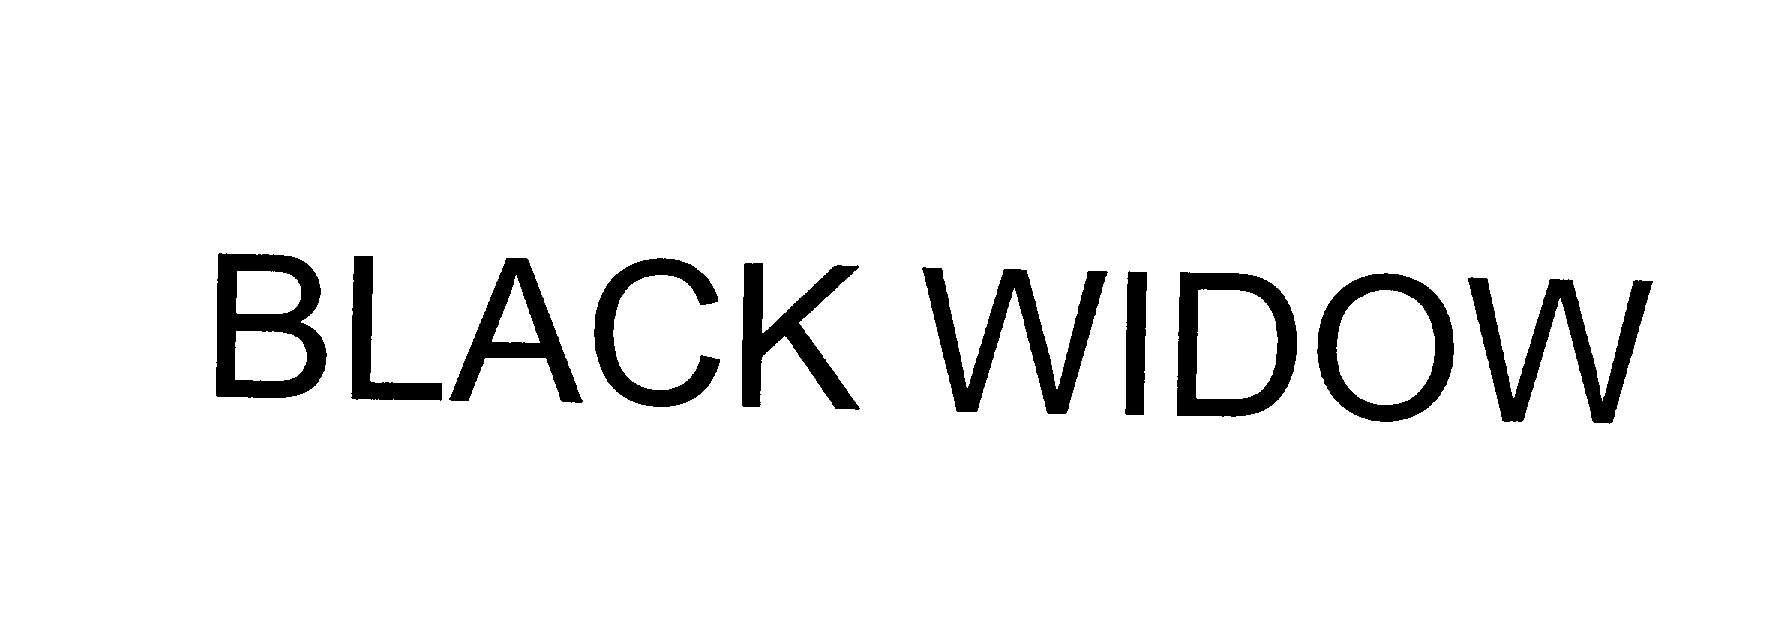  BLACK WIDOW